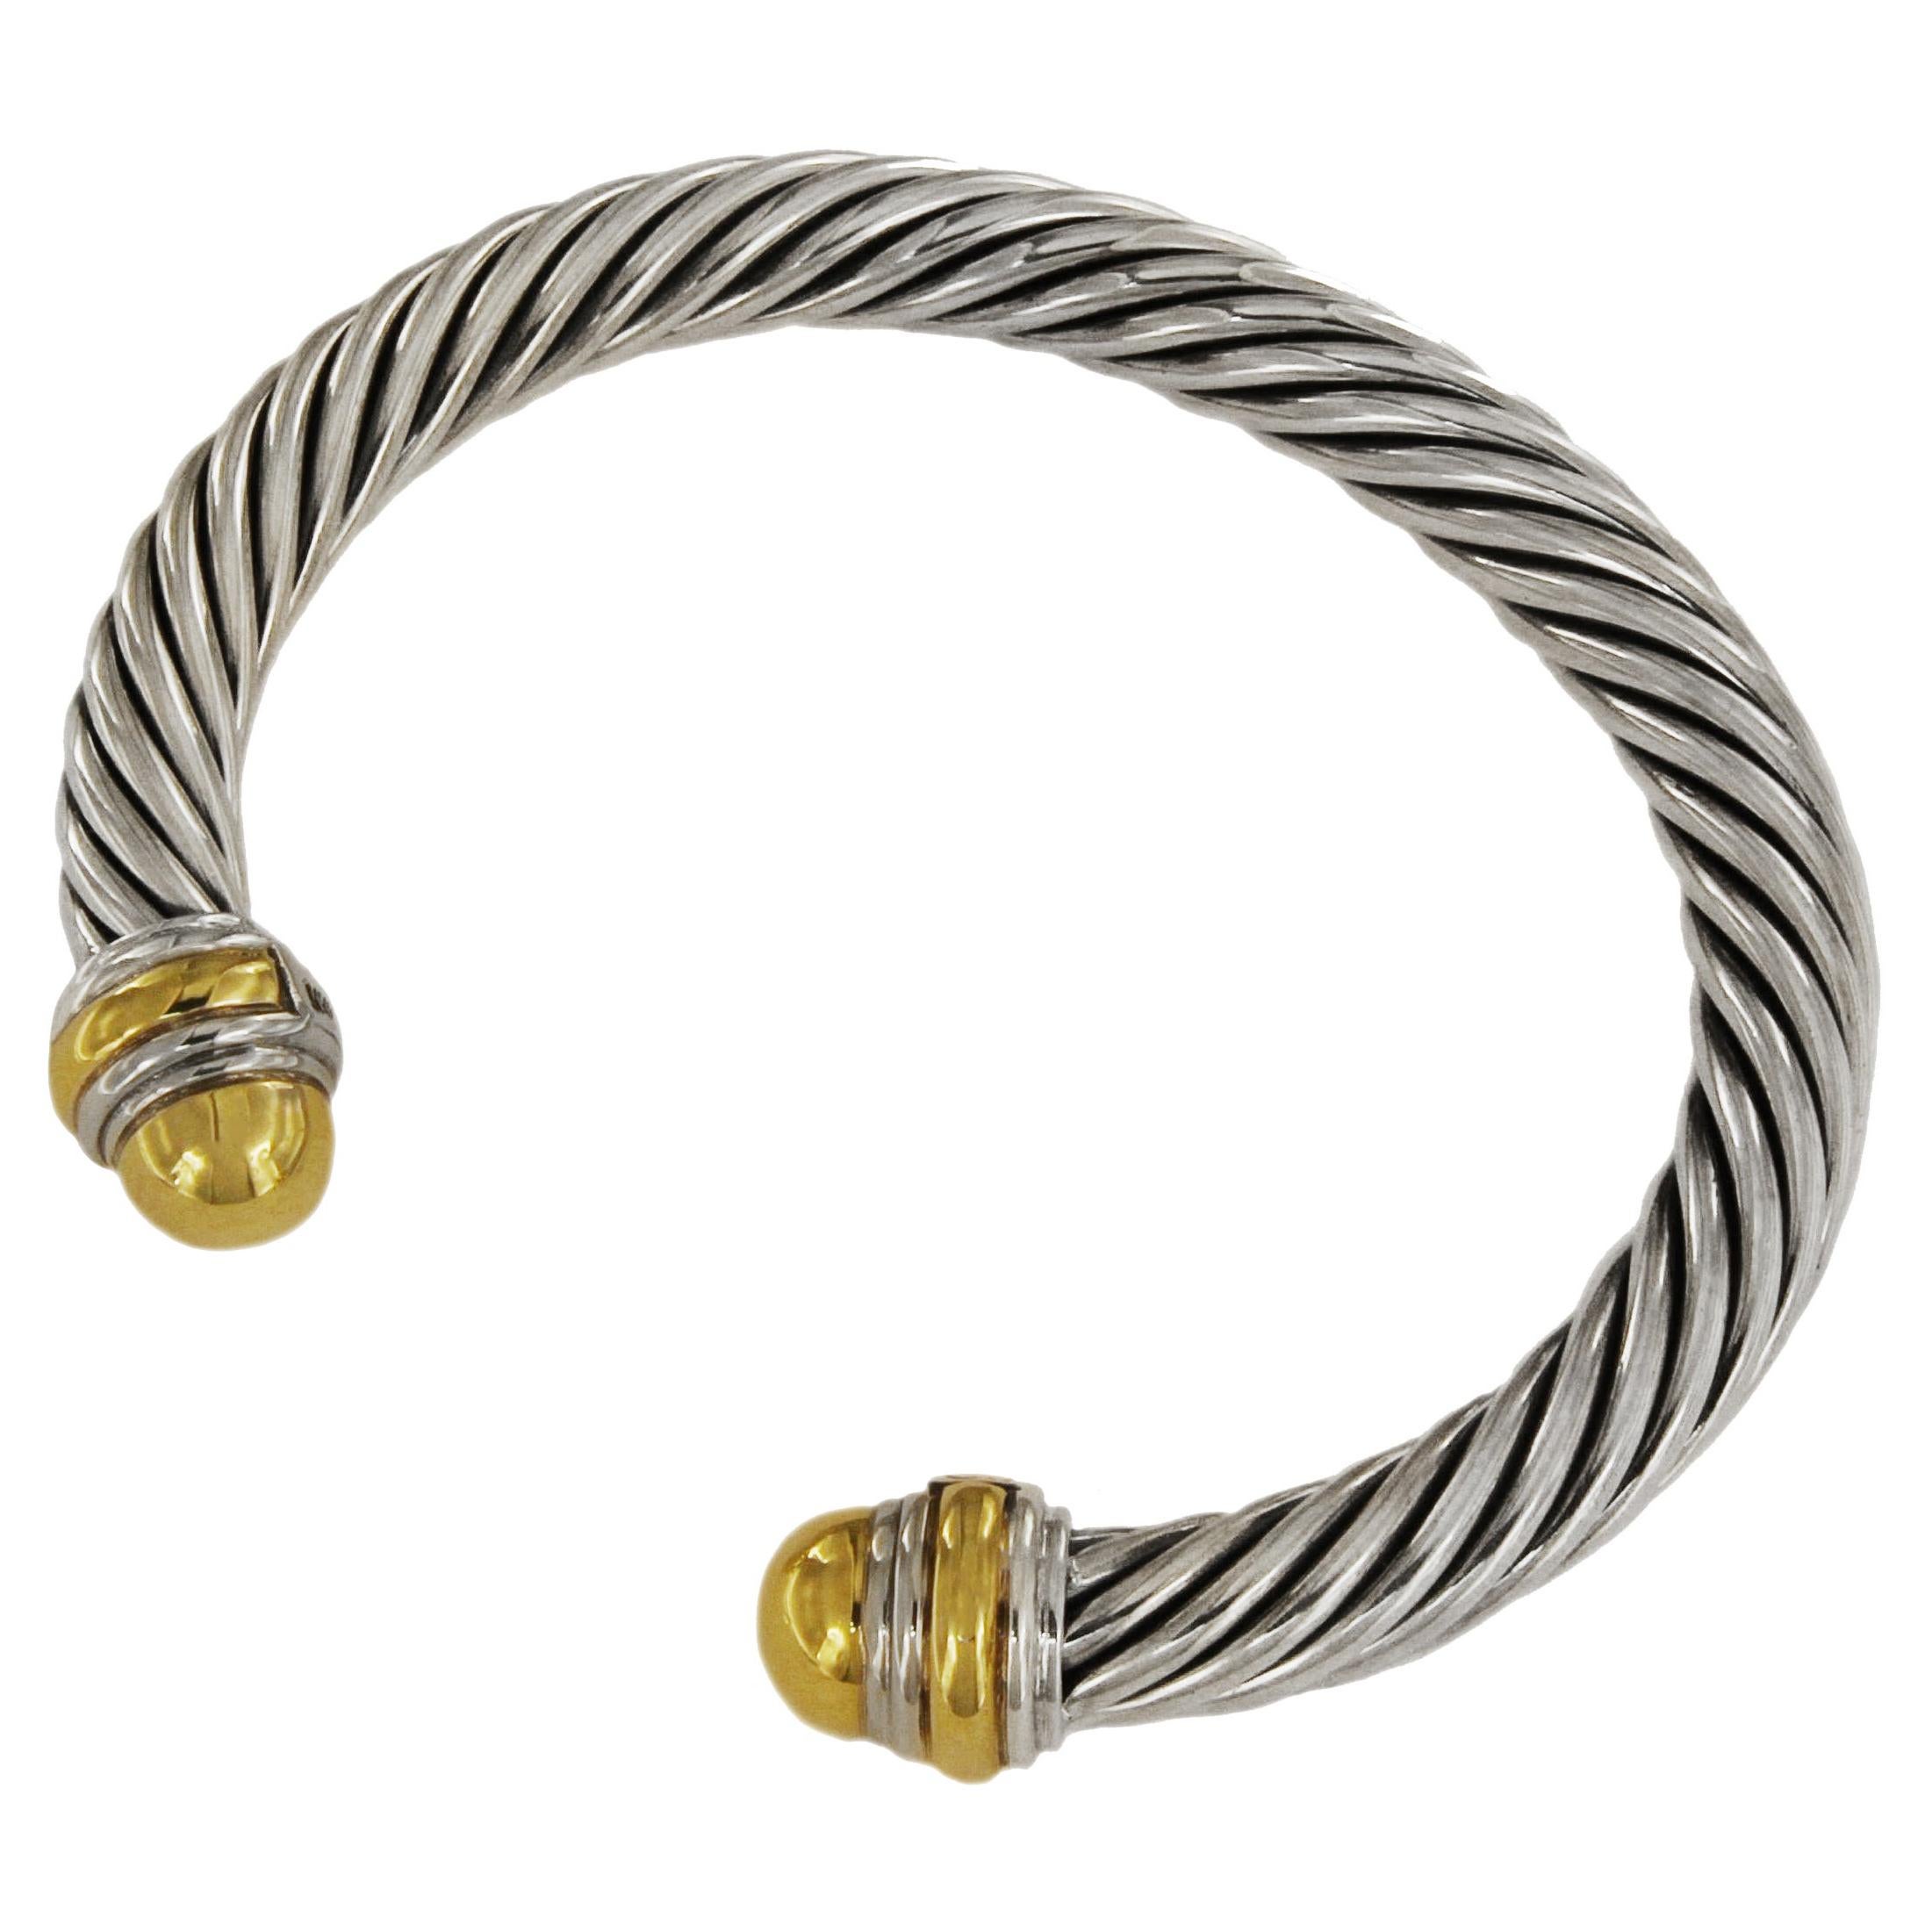 David Yurman Cable Classics Bracelet with 14k Gold